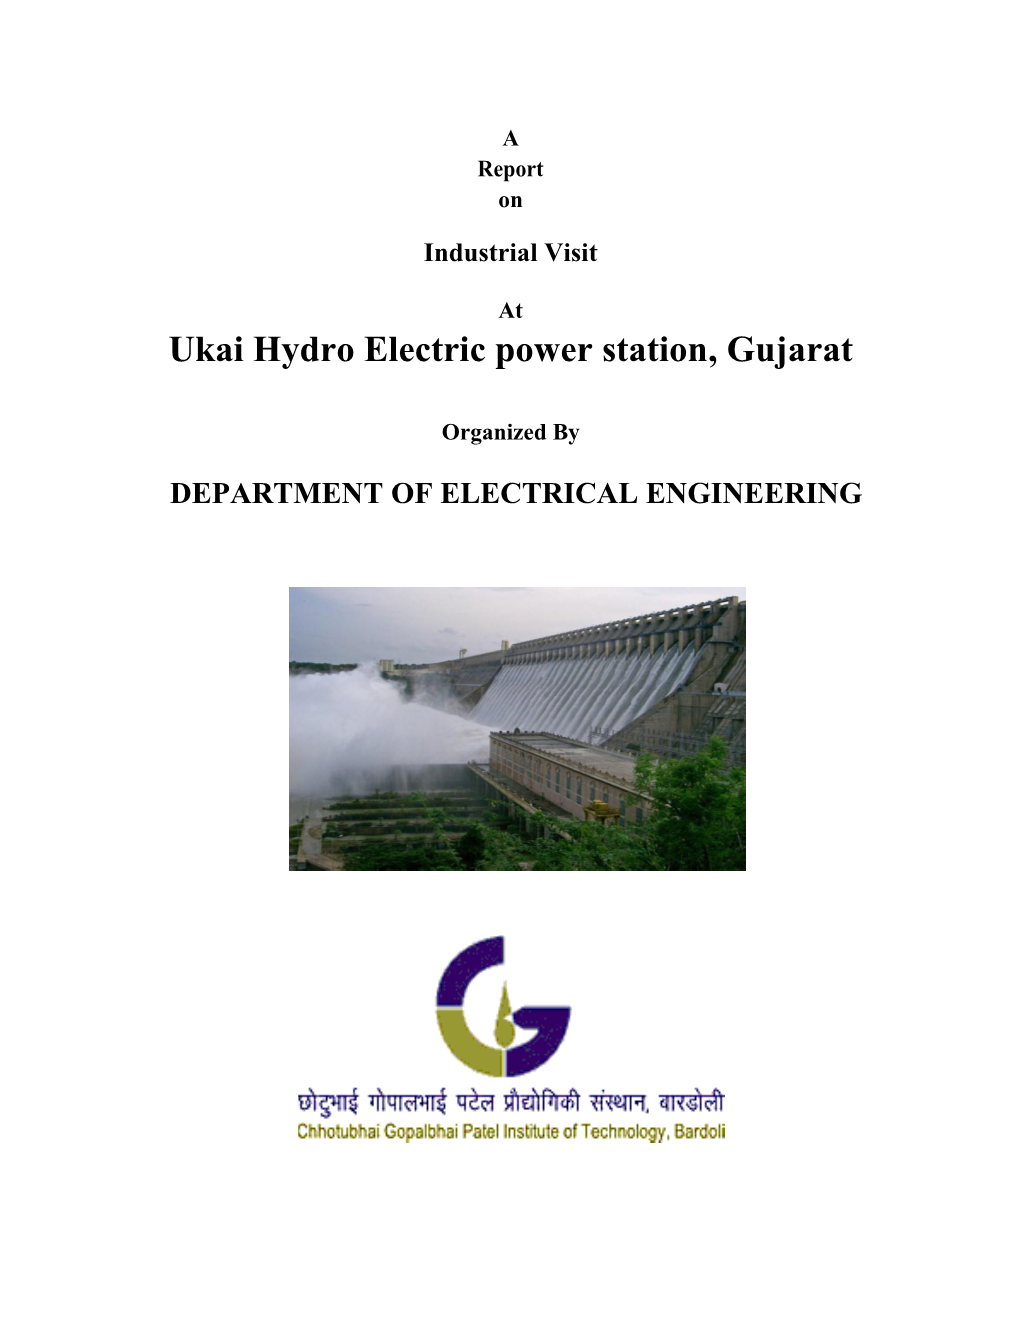 Ukai Hydro Electric Power Station, Gujarat